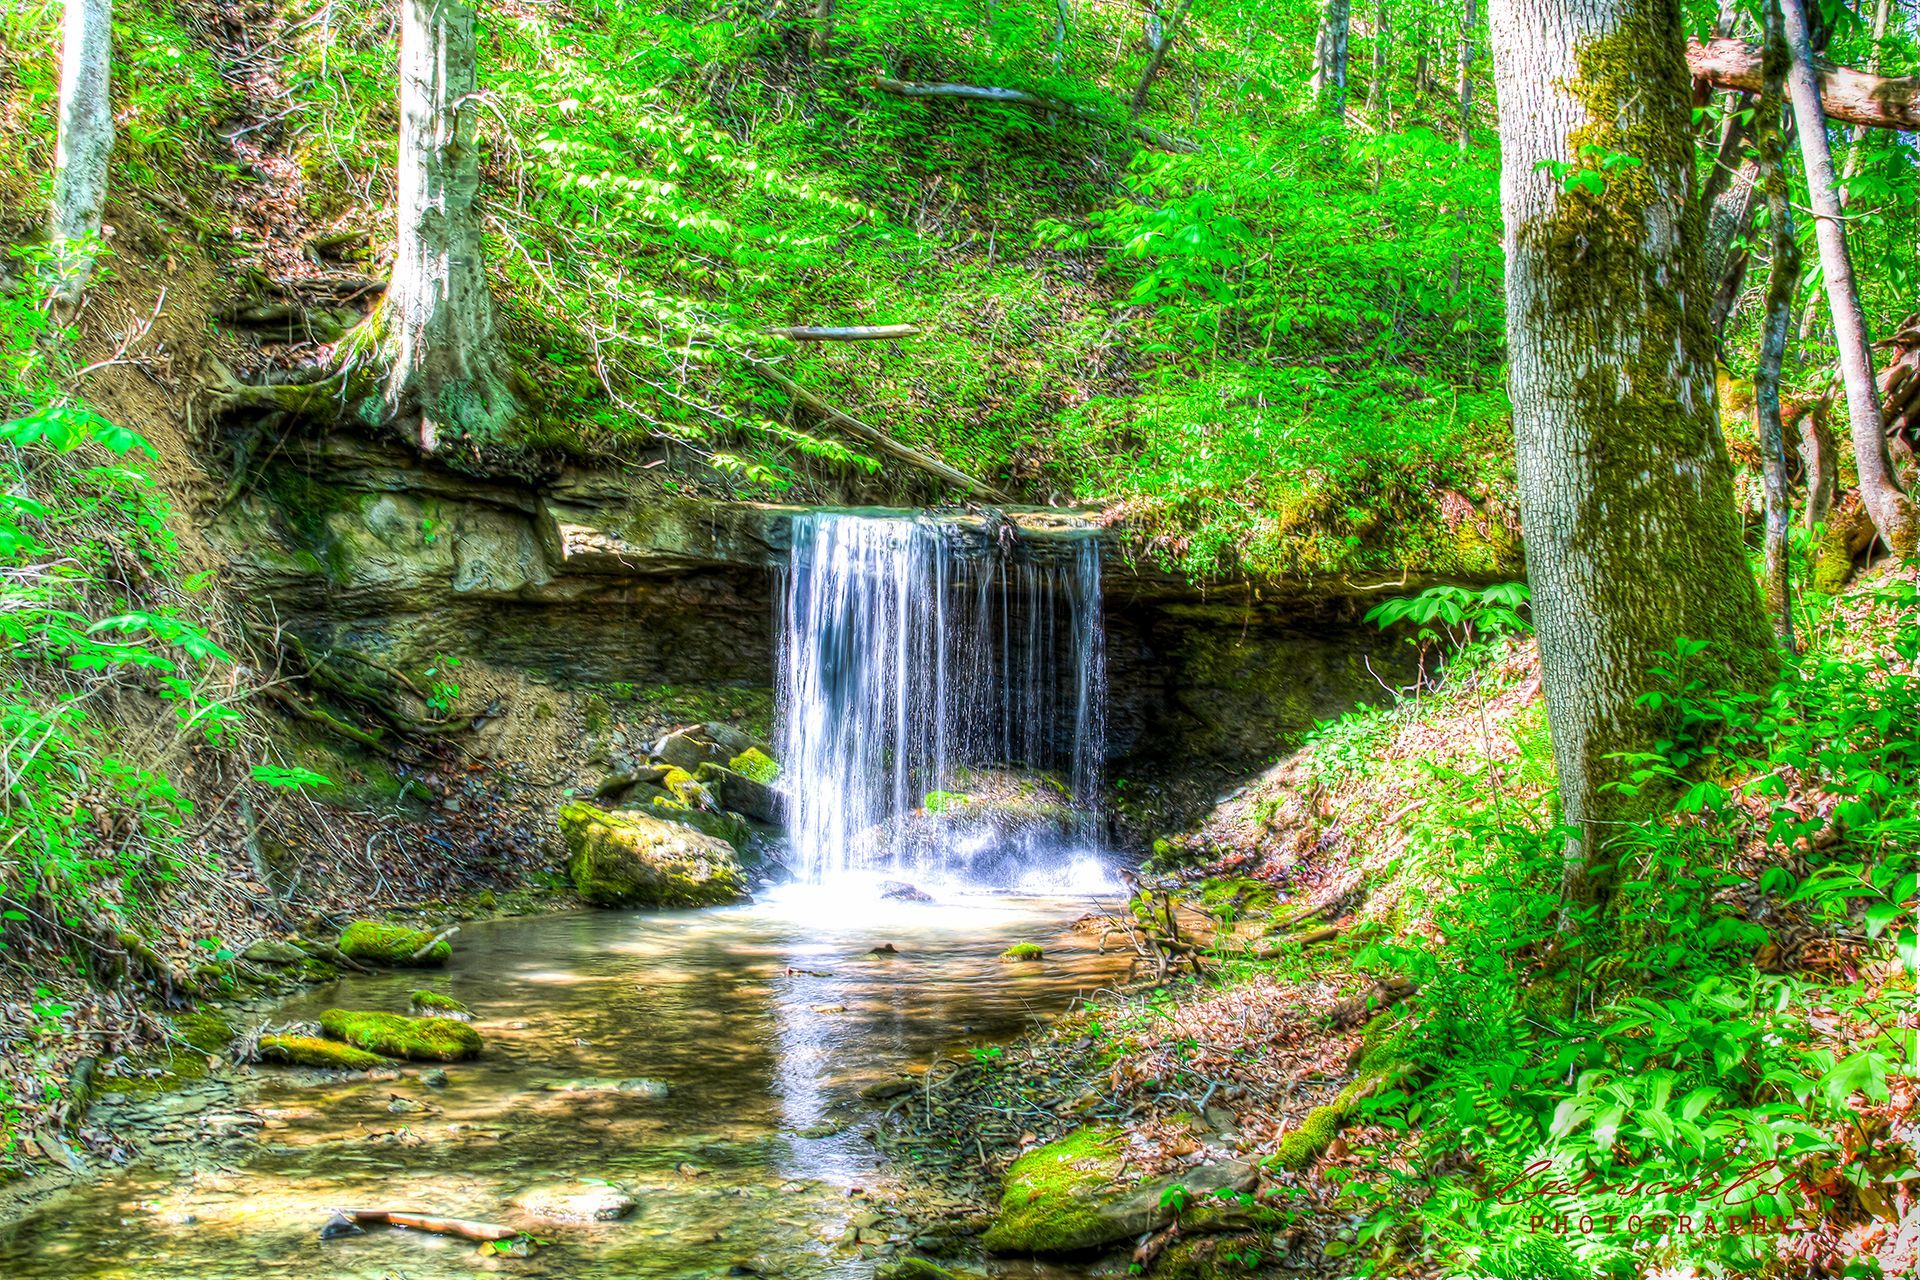 Waterfall in Clay County in Kentucky